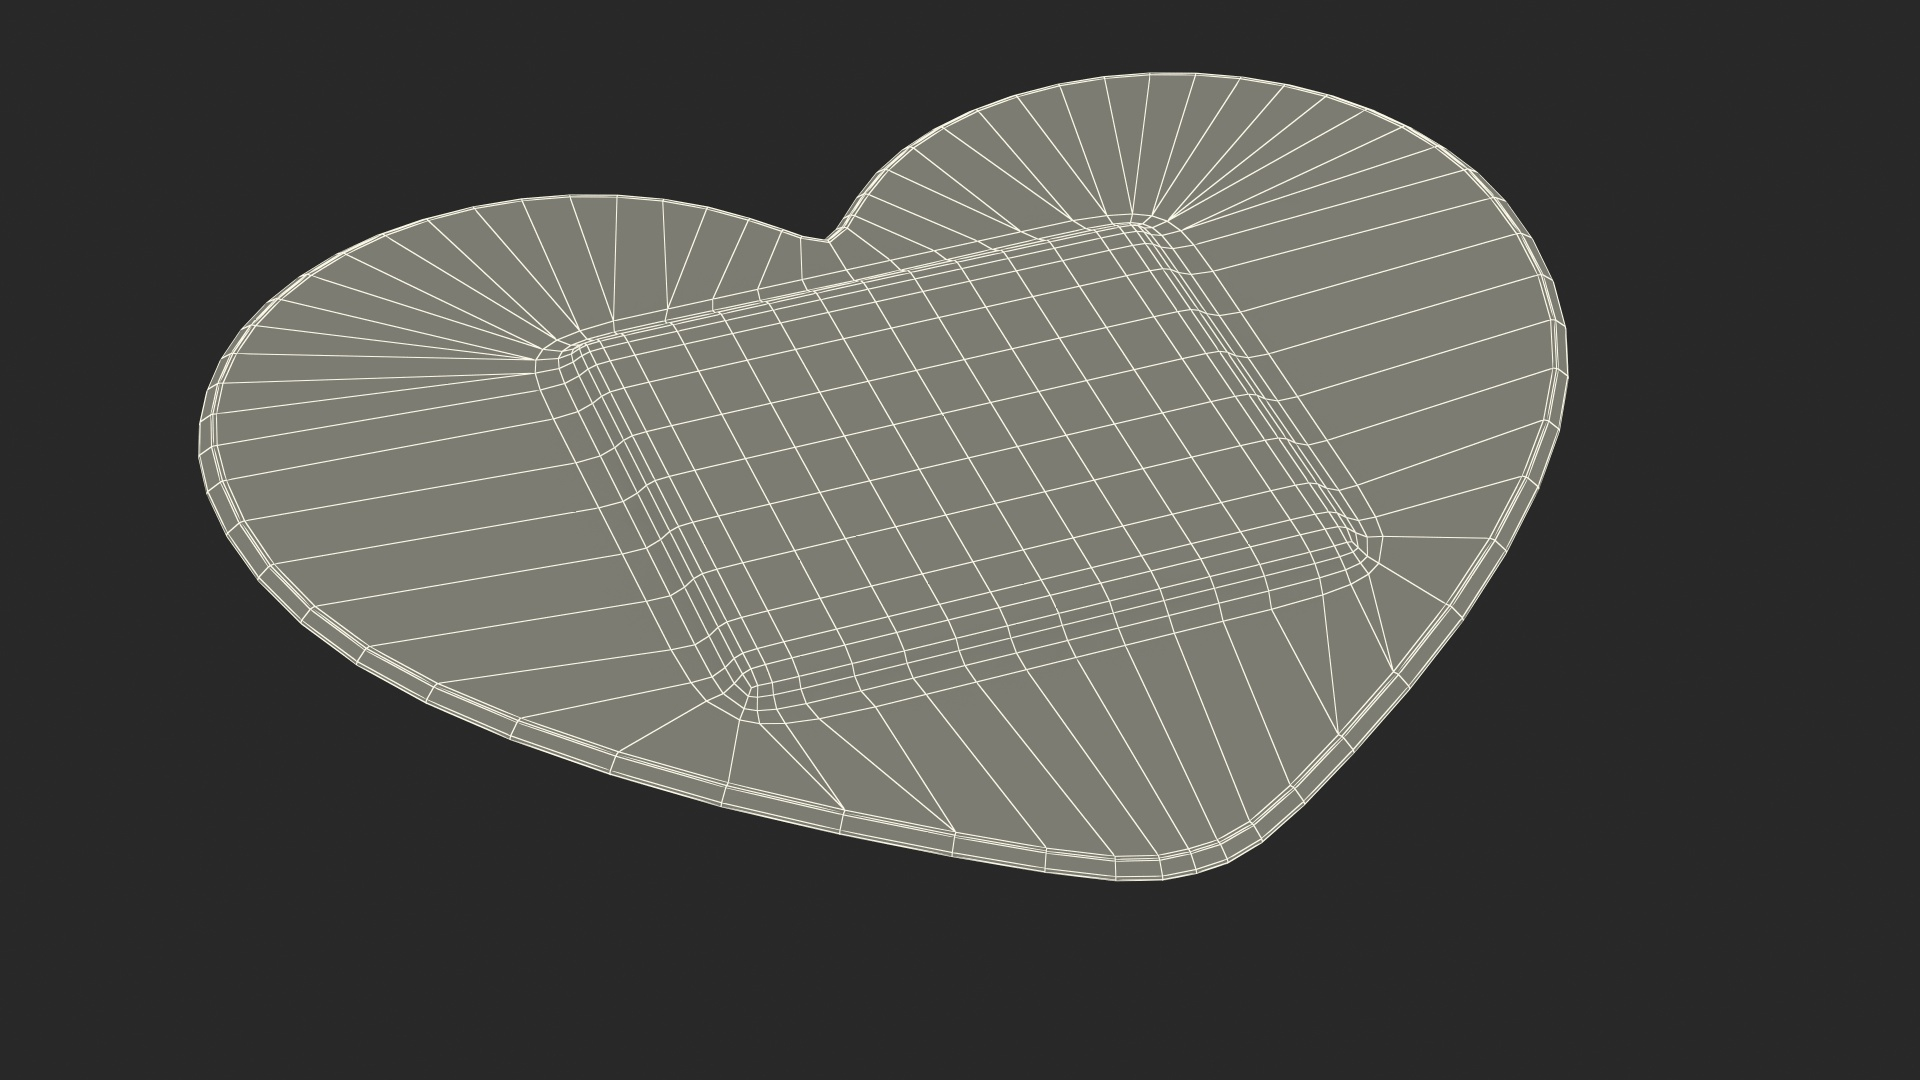 https://p.turbosquid.com/ts-thumb/0H/RcKw54/fZ/heart_shaped_band_aid_for_kids_361/jpg/1665648820/1920x1080/turn_fit_q99/ae17b2a74d278a1a18b0c96aa090d7de59f4febb/heart_shaped_band_aid_for_kids_361-1.jpg